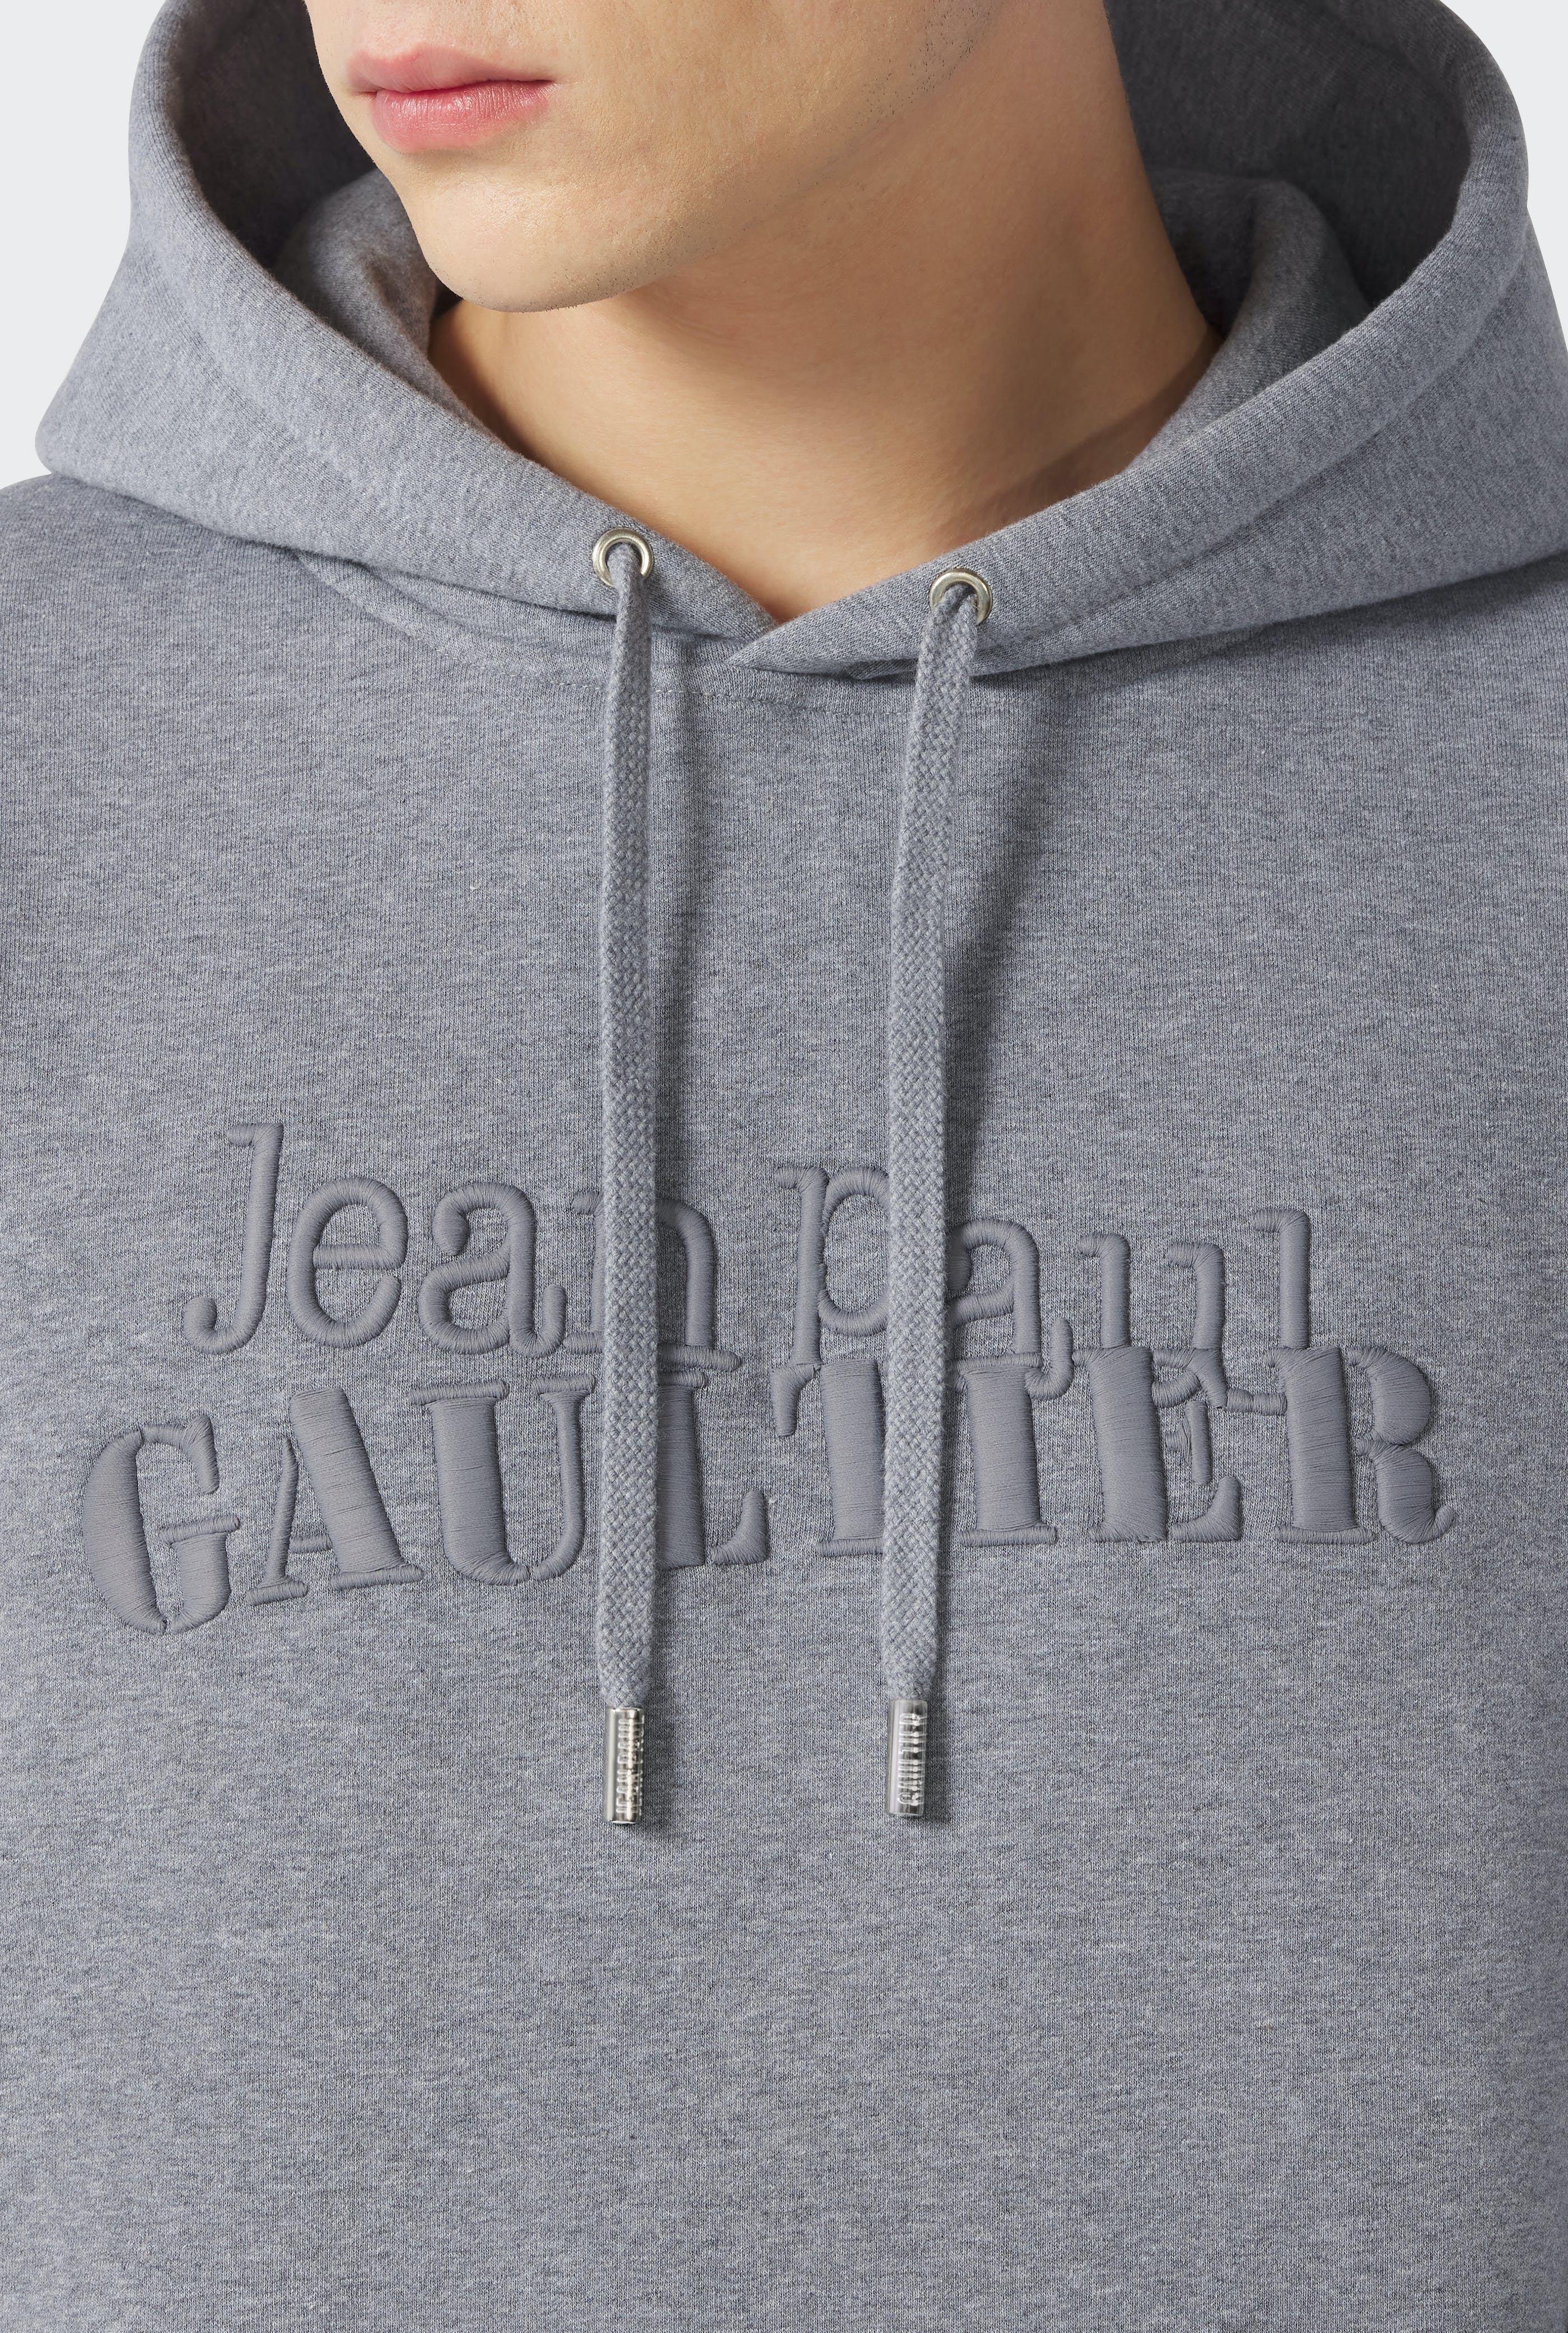 The Grey Jean Paul Gaultier Hoodie